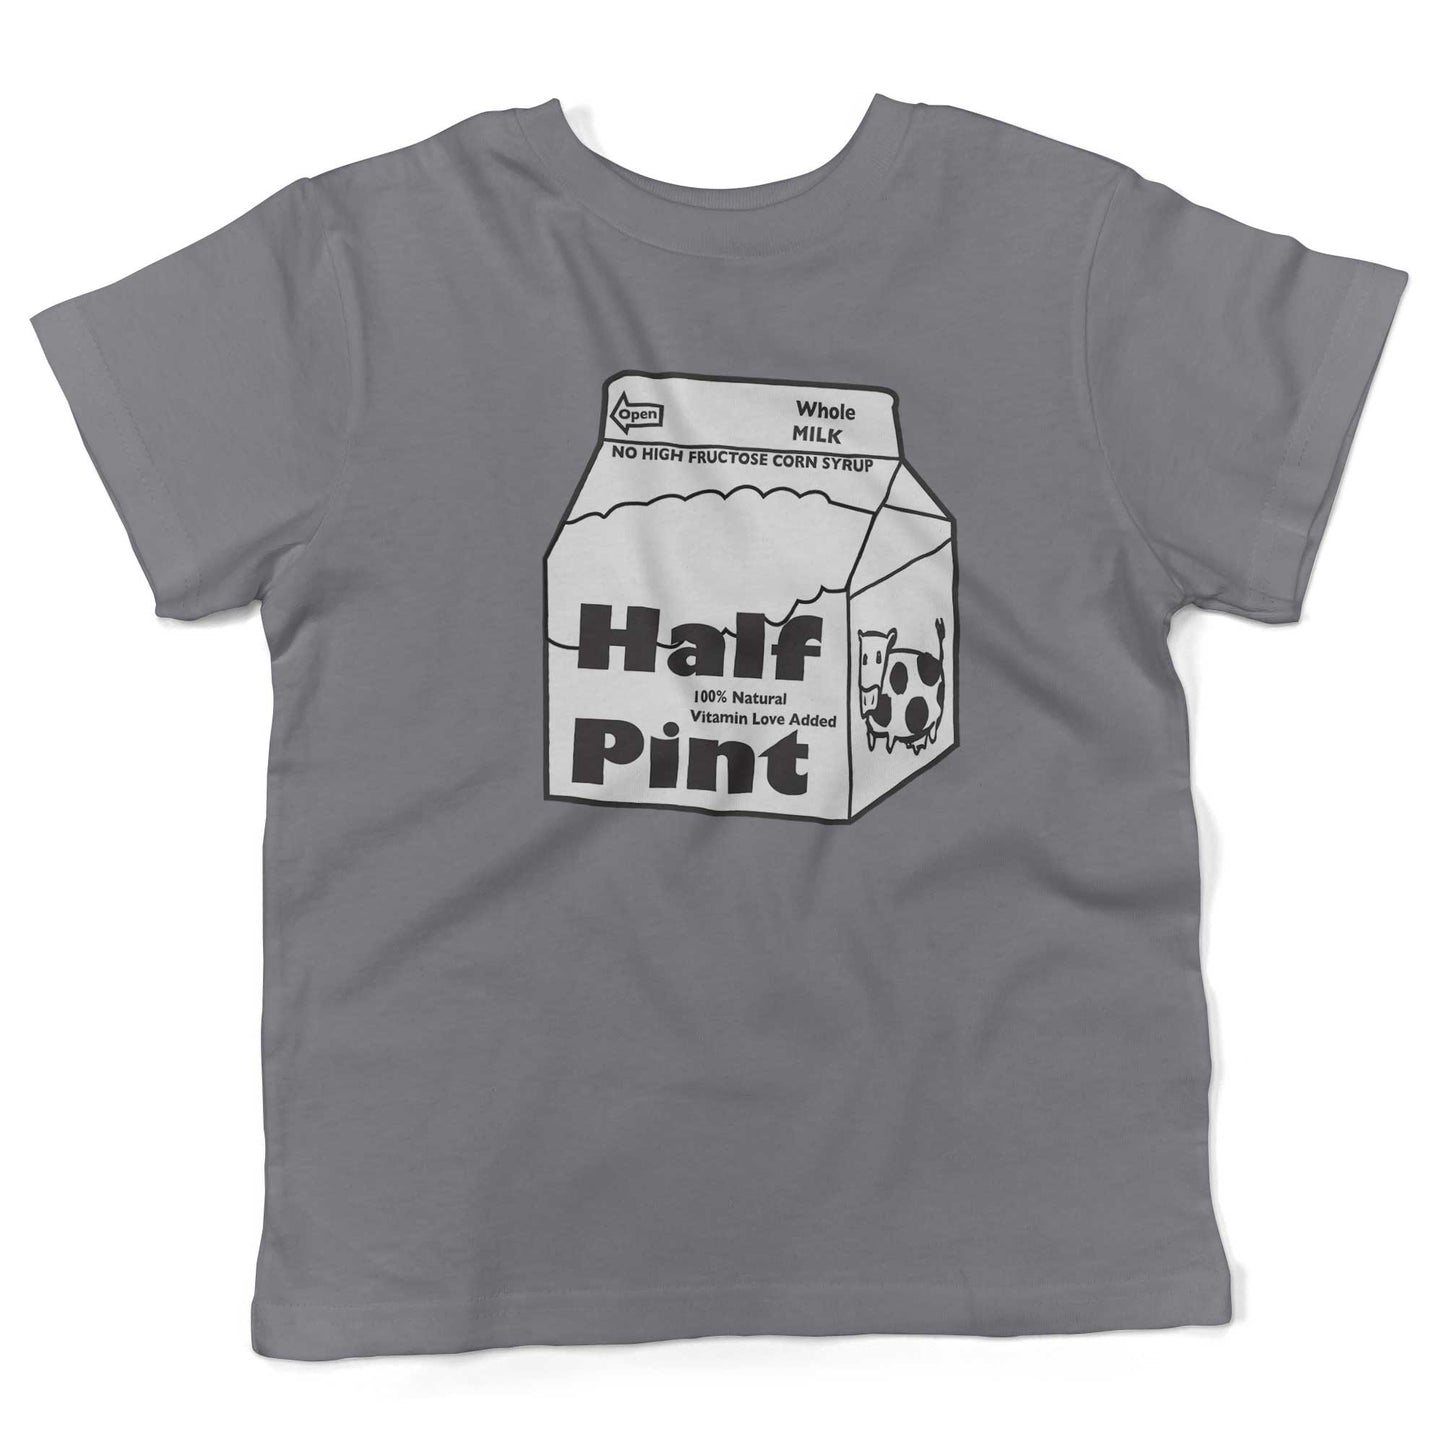 Half Pint Of Milk Toddler Shirt-Slate-2T